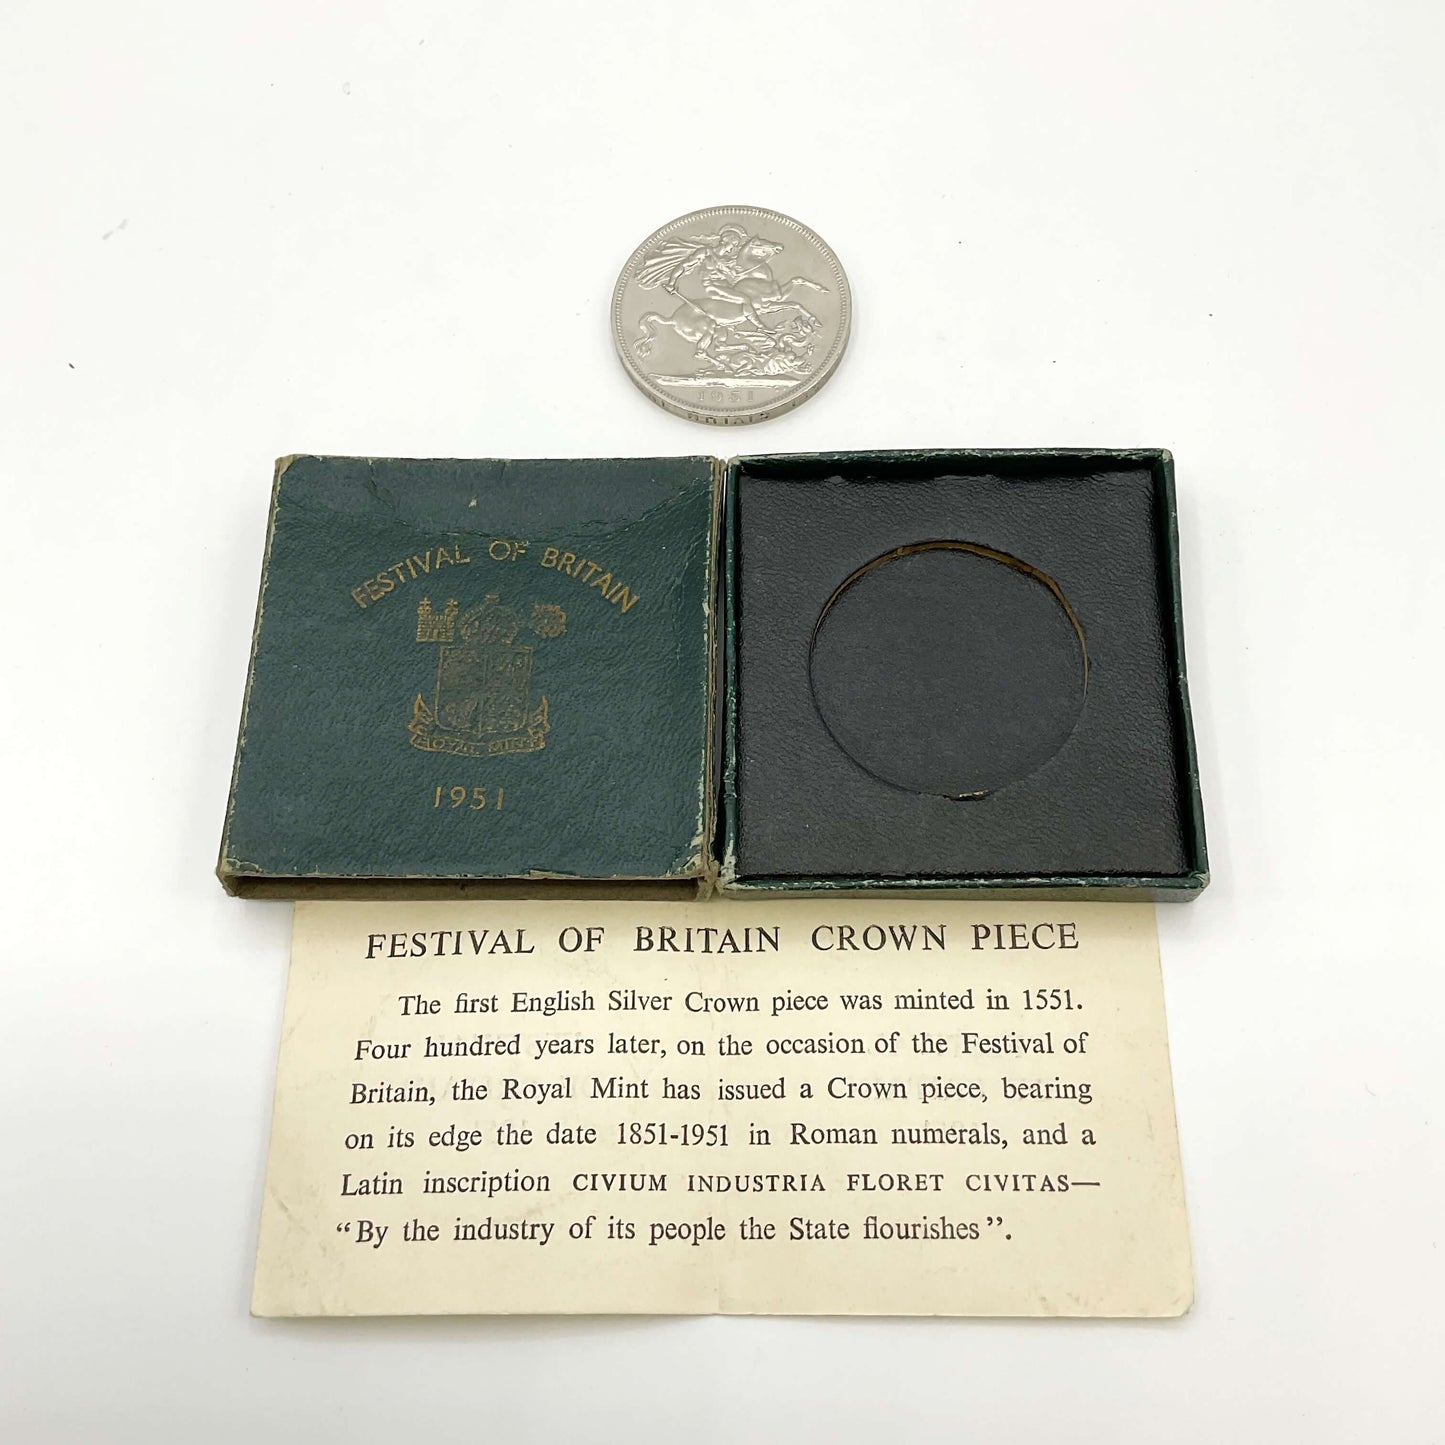 Festival of Britain coin with presentation box